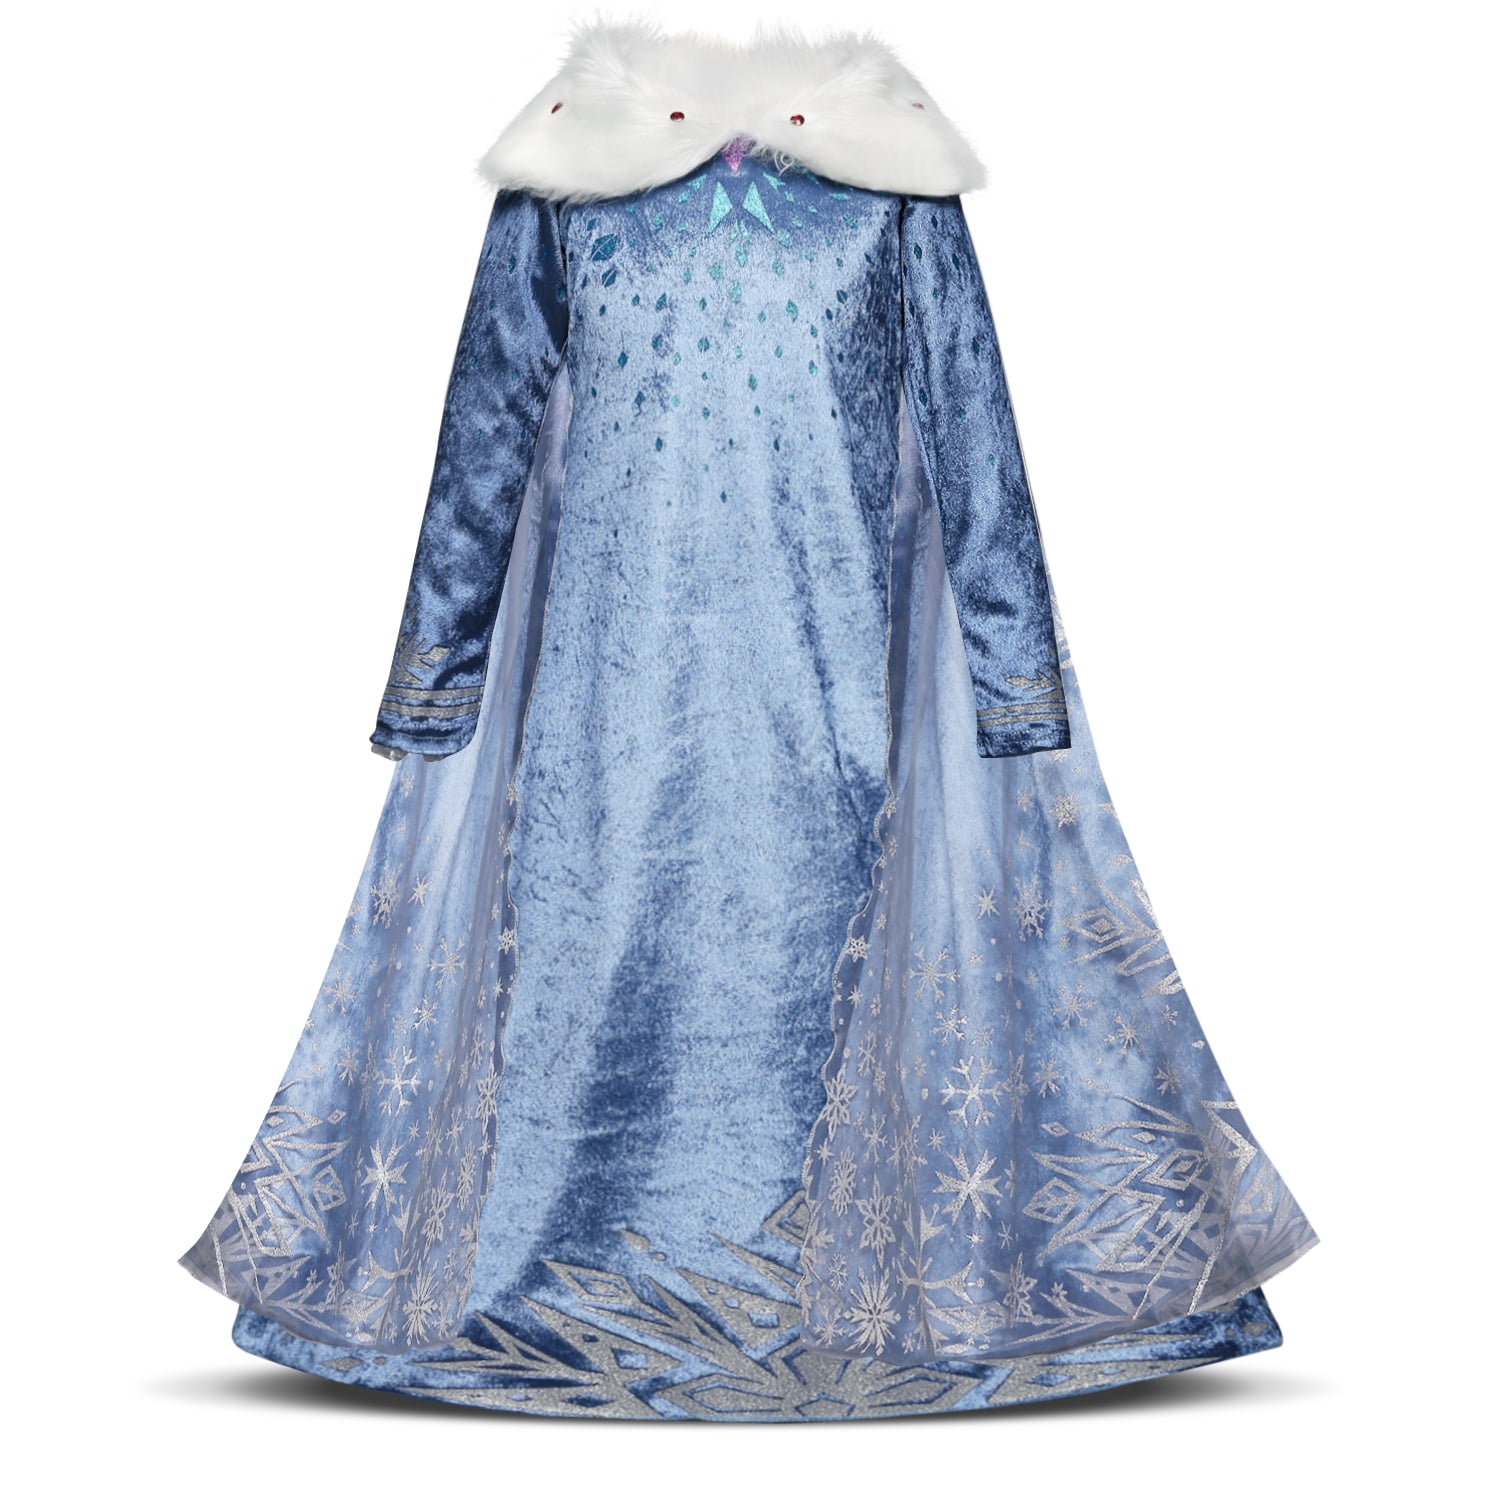 HOT Kids Girls Elsa Frozen Dress Costume Princess Anna Party Dresses Cosplay US 